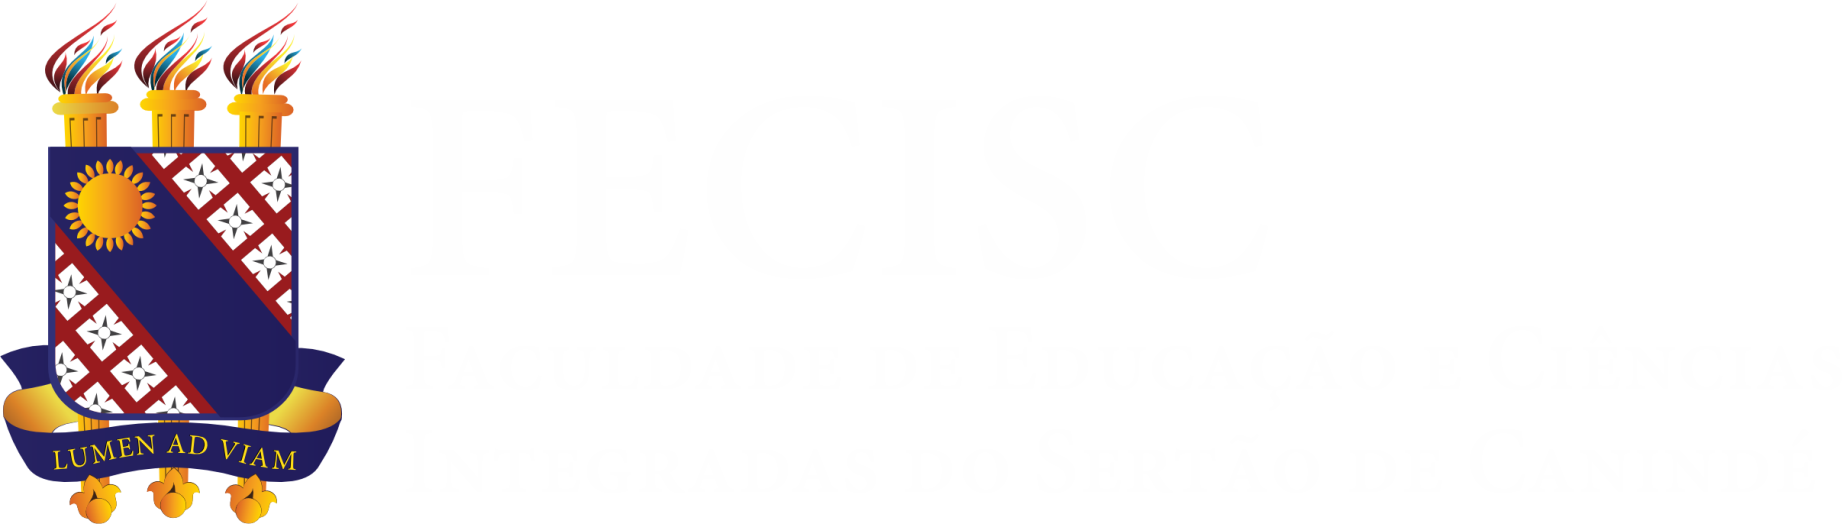 Logo Fecisc_white